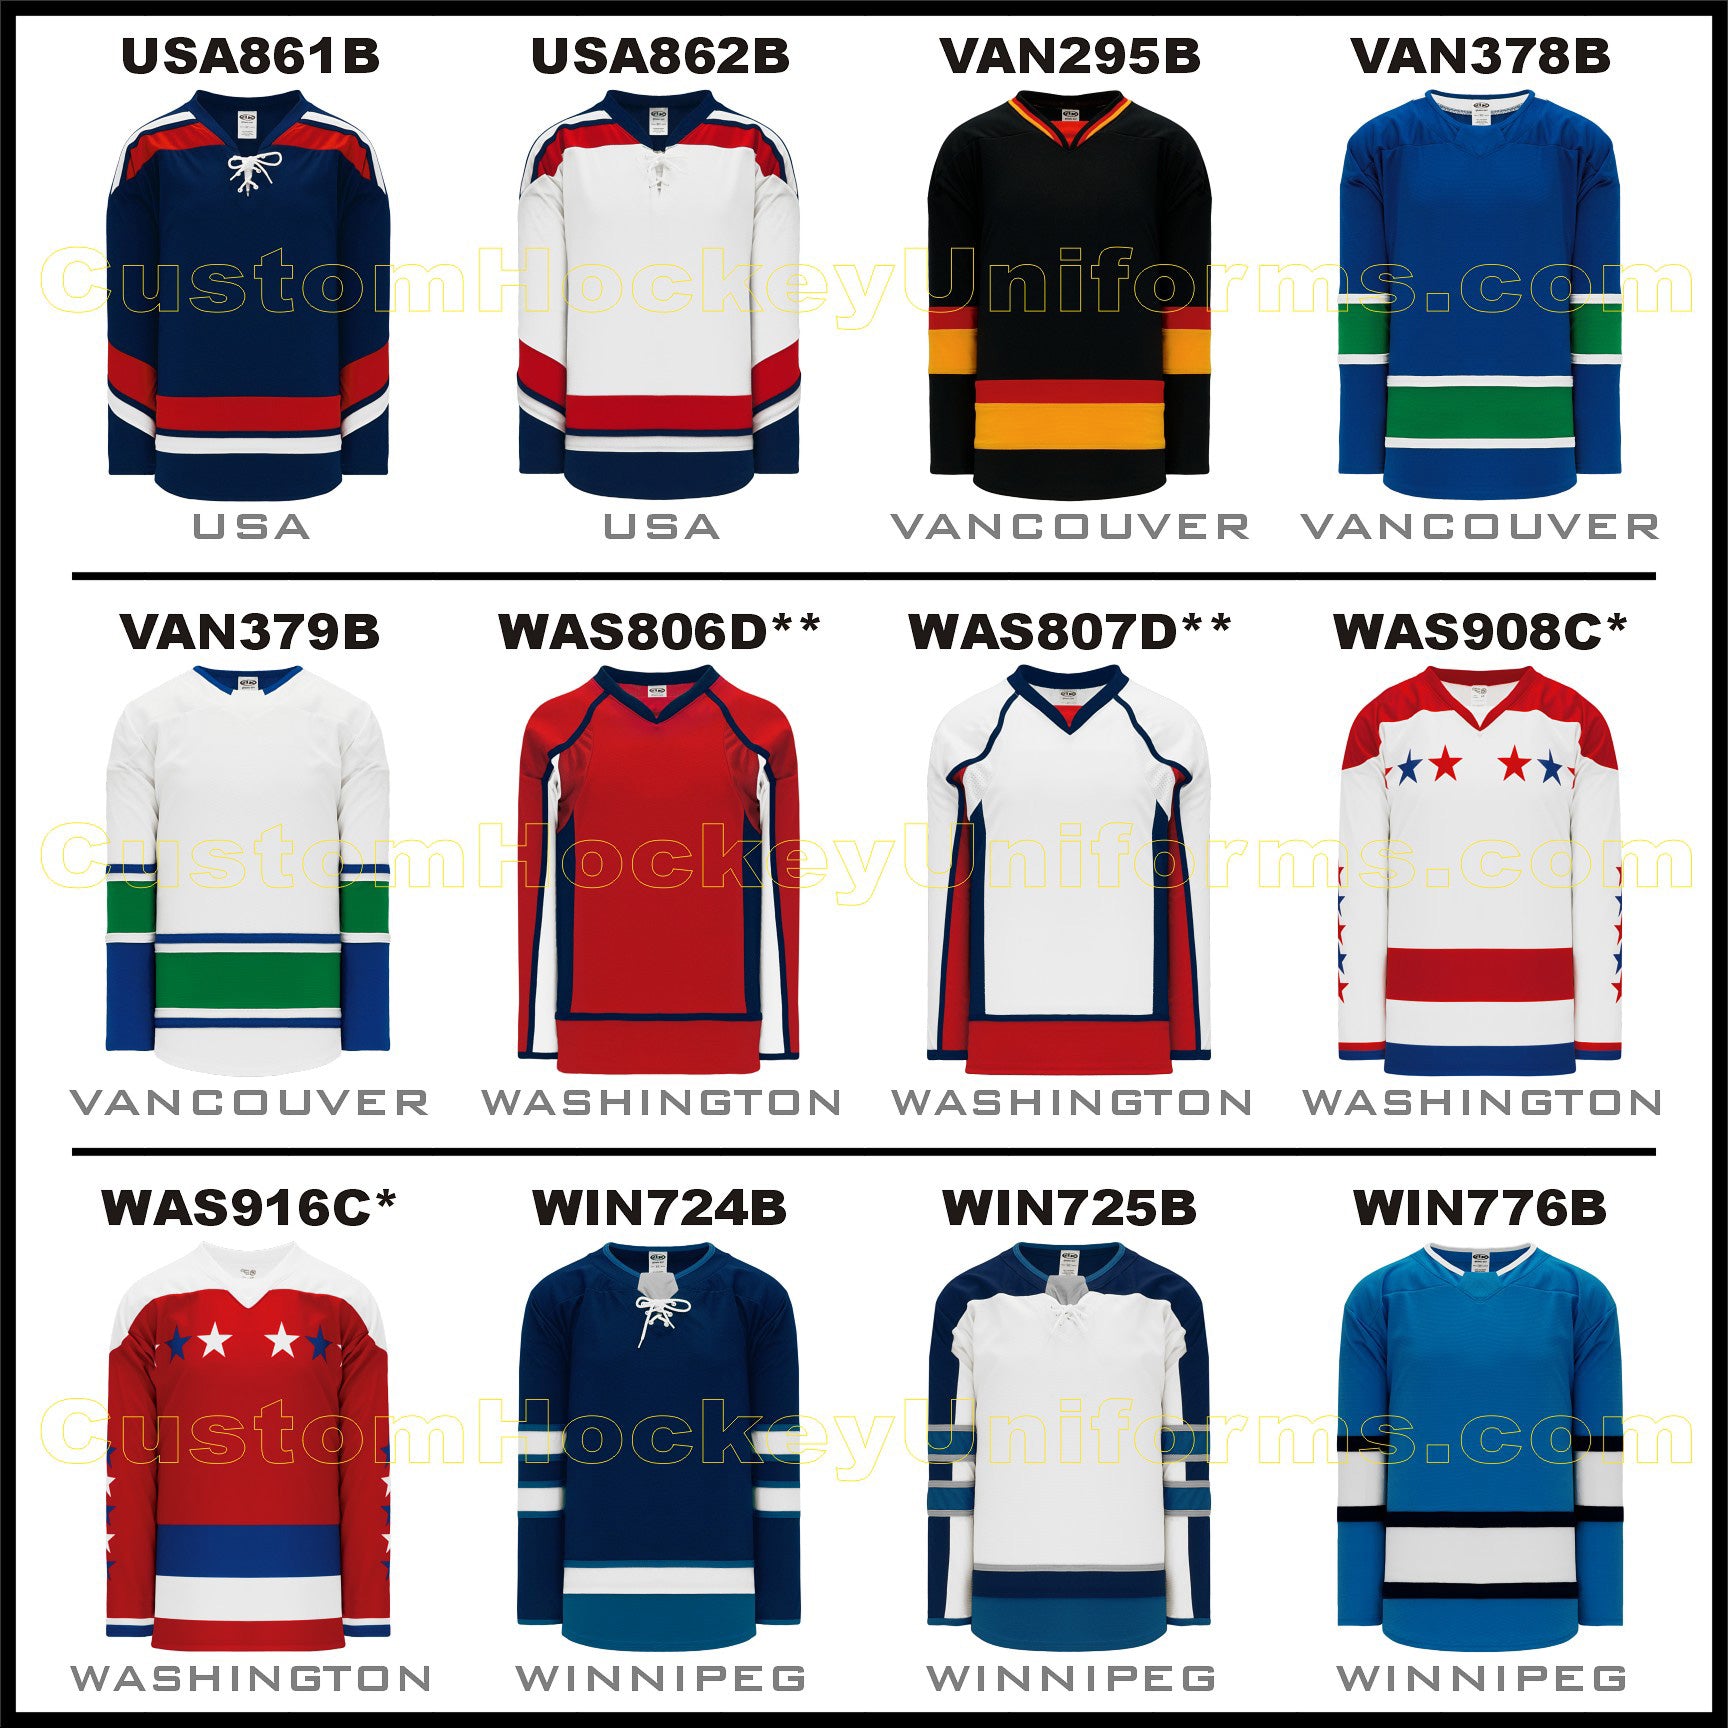 Custom Hockey Jerseys Like the Pros - Learn How - Save 20%